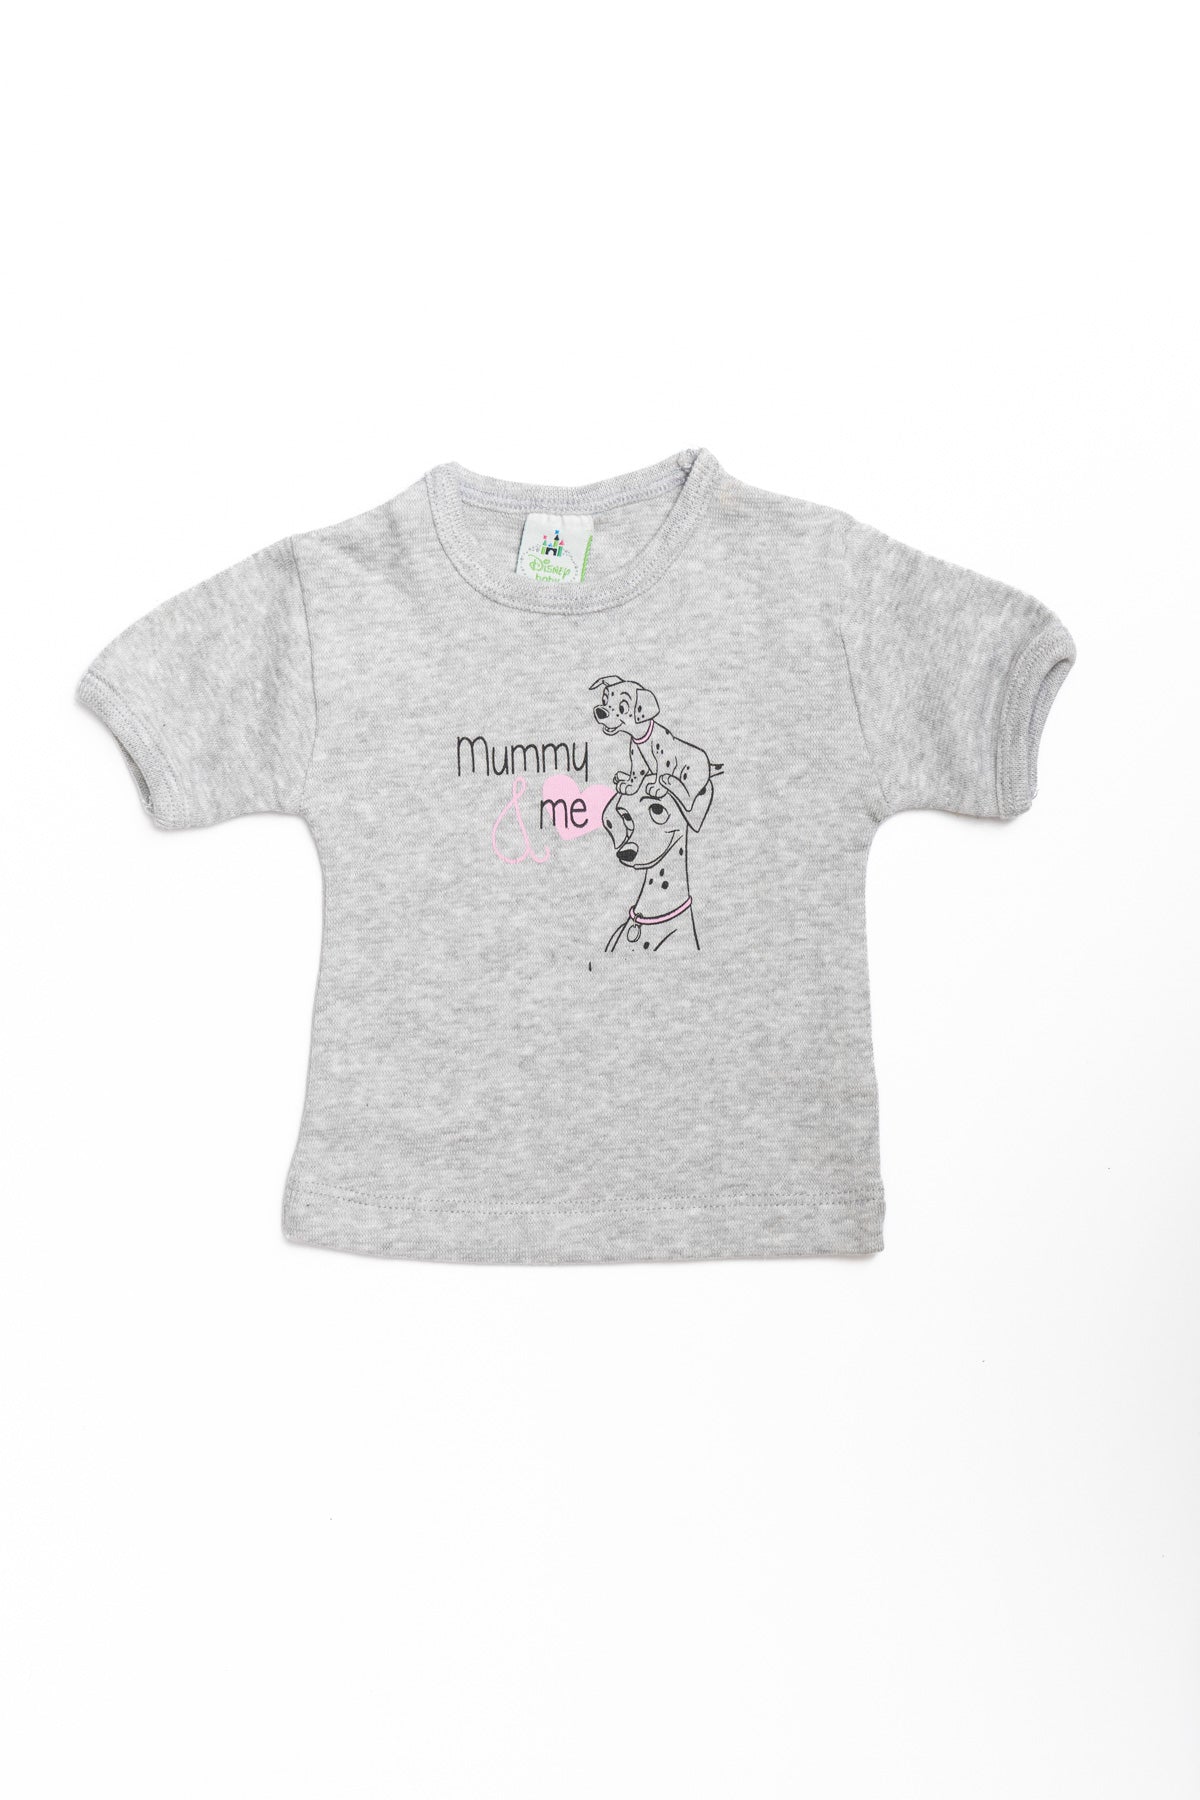 T-Shirt Baby Dalmation  "Mummy & ME" Half sleeve 4035